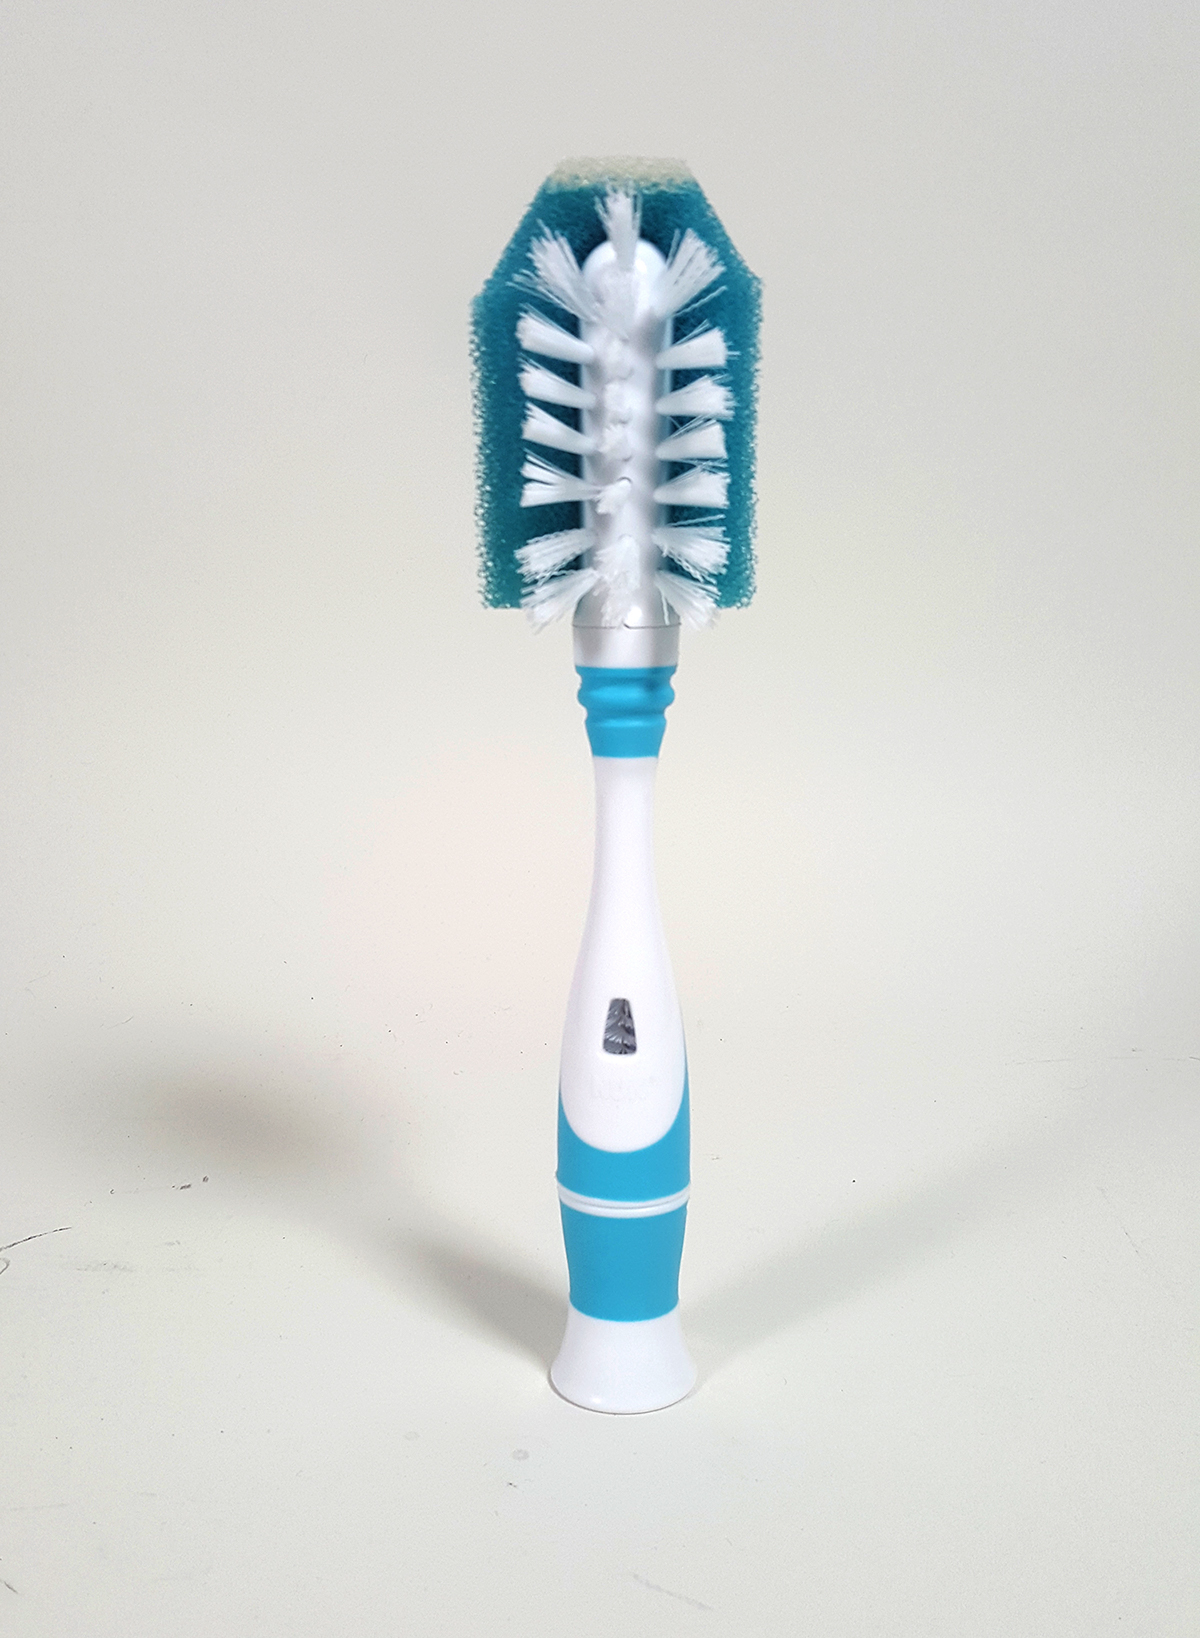 NUK bottle brush bristles Sponge housewares baby toddler design product